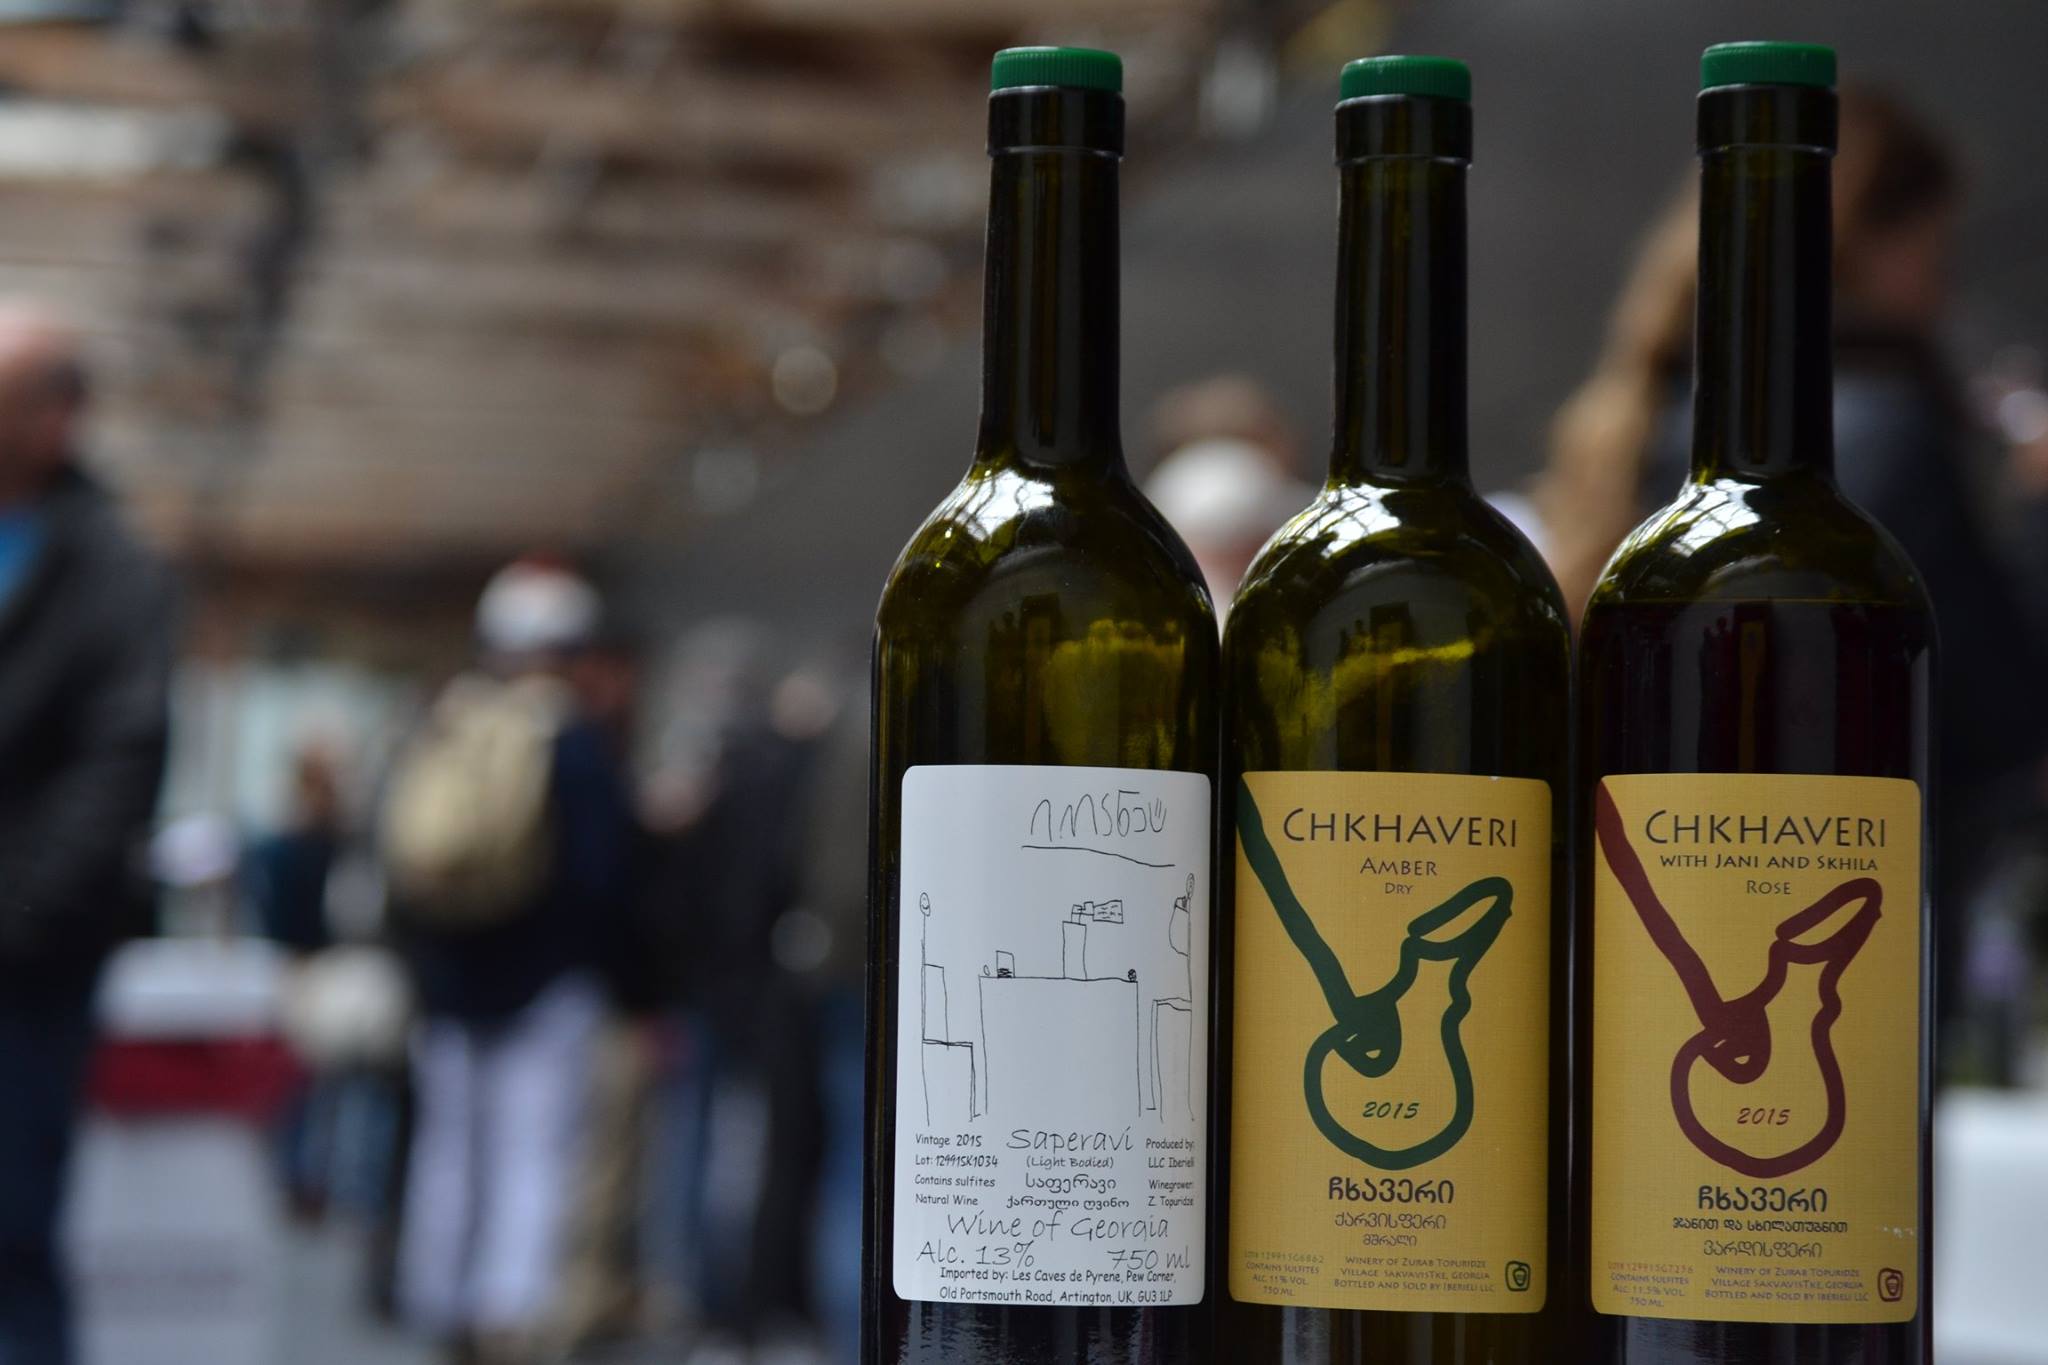 3 of Iberieli's most popular wine bottles